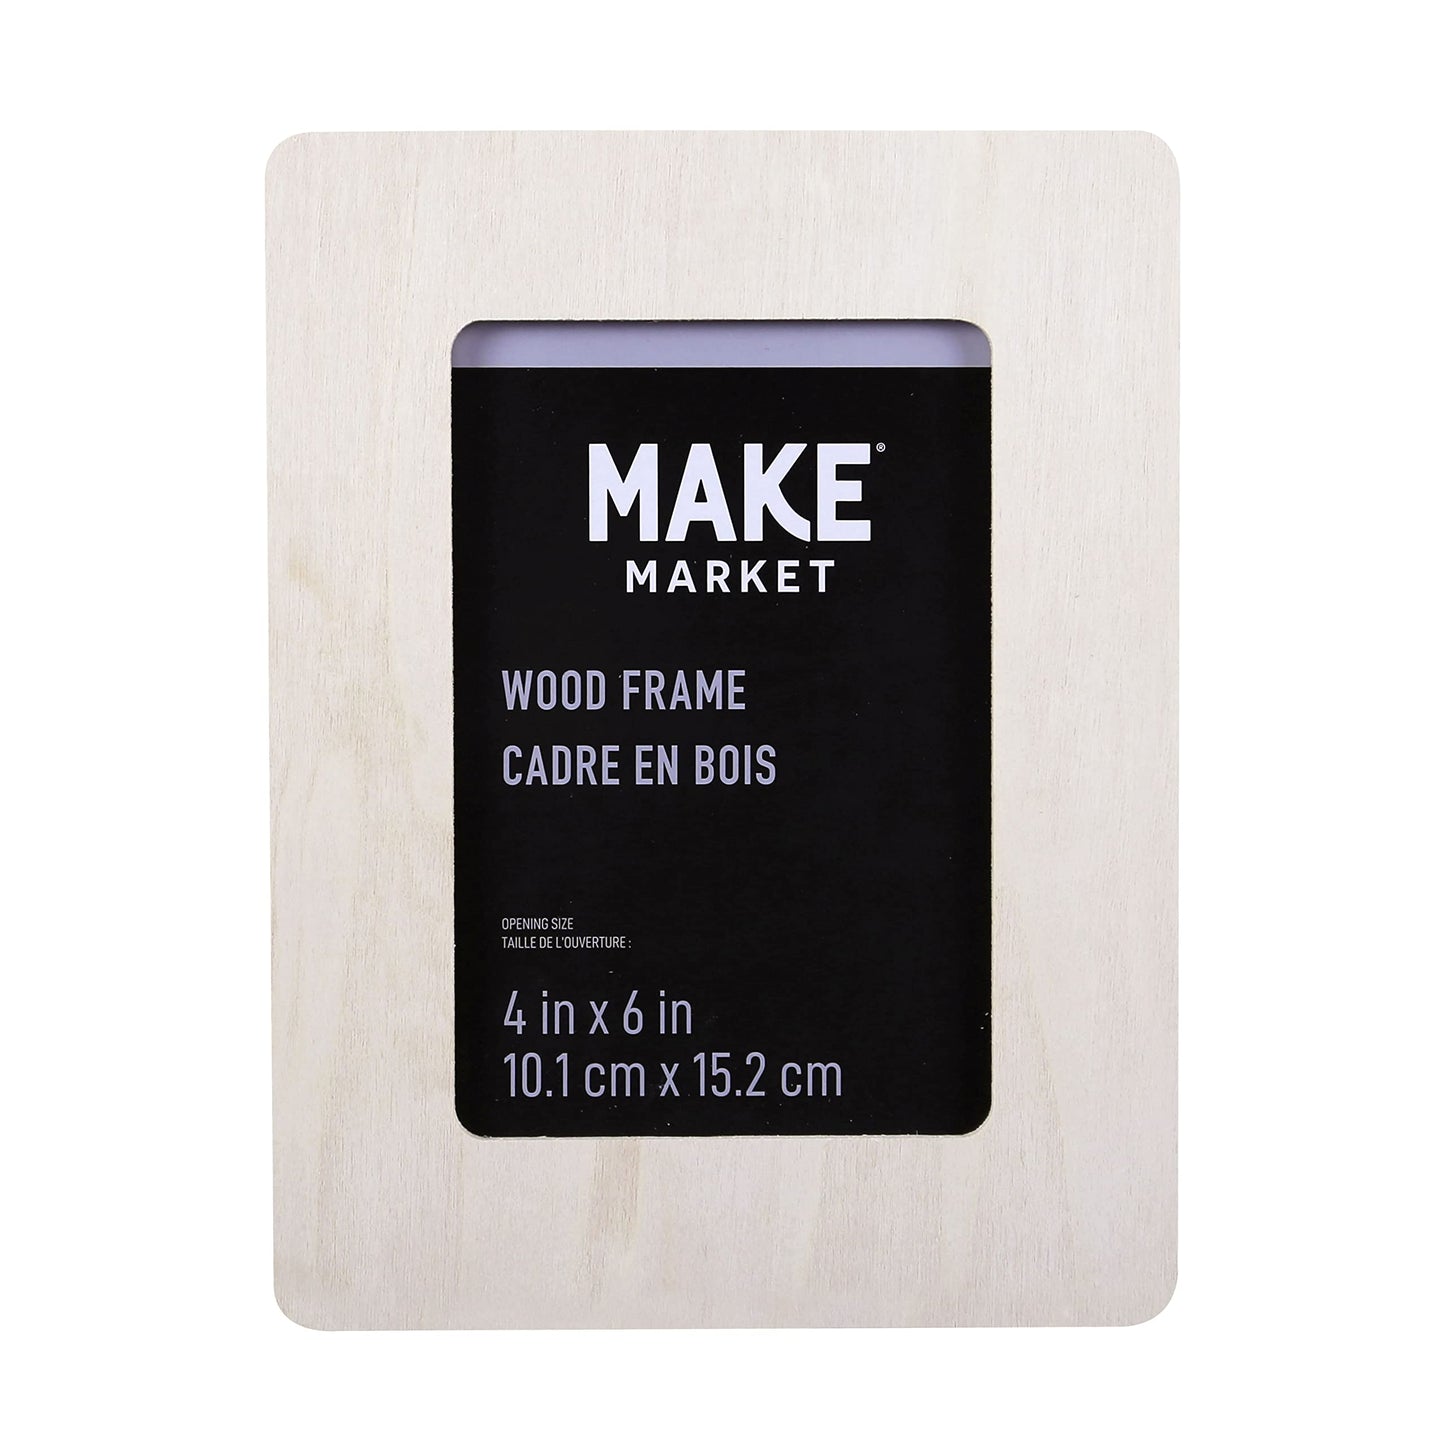 Make Market Wood Photo Frames Unfinished 4” x 6” Plywood Frames - Paintable Picture Frame for Office, Home, School - Bulk 24 Pack